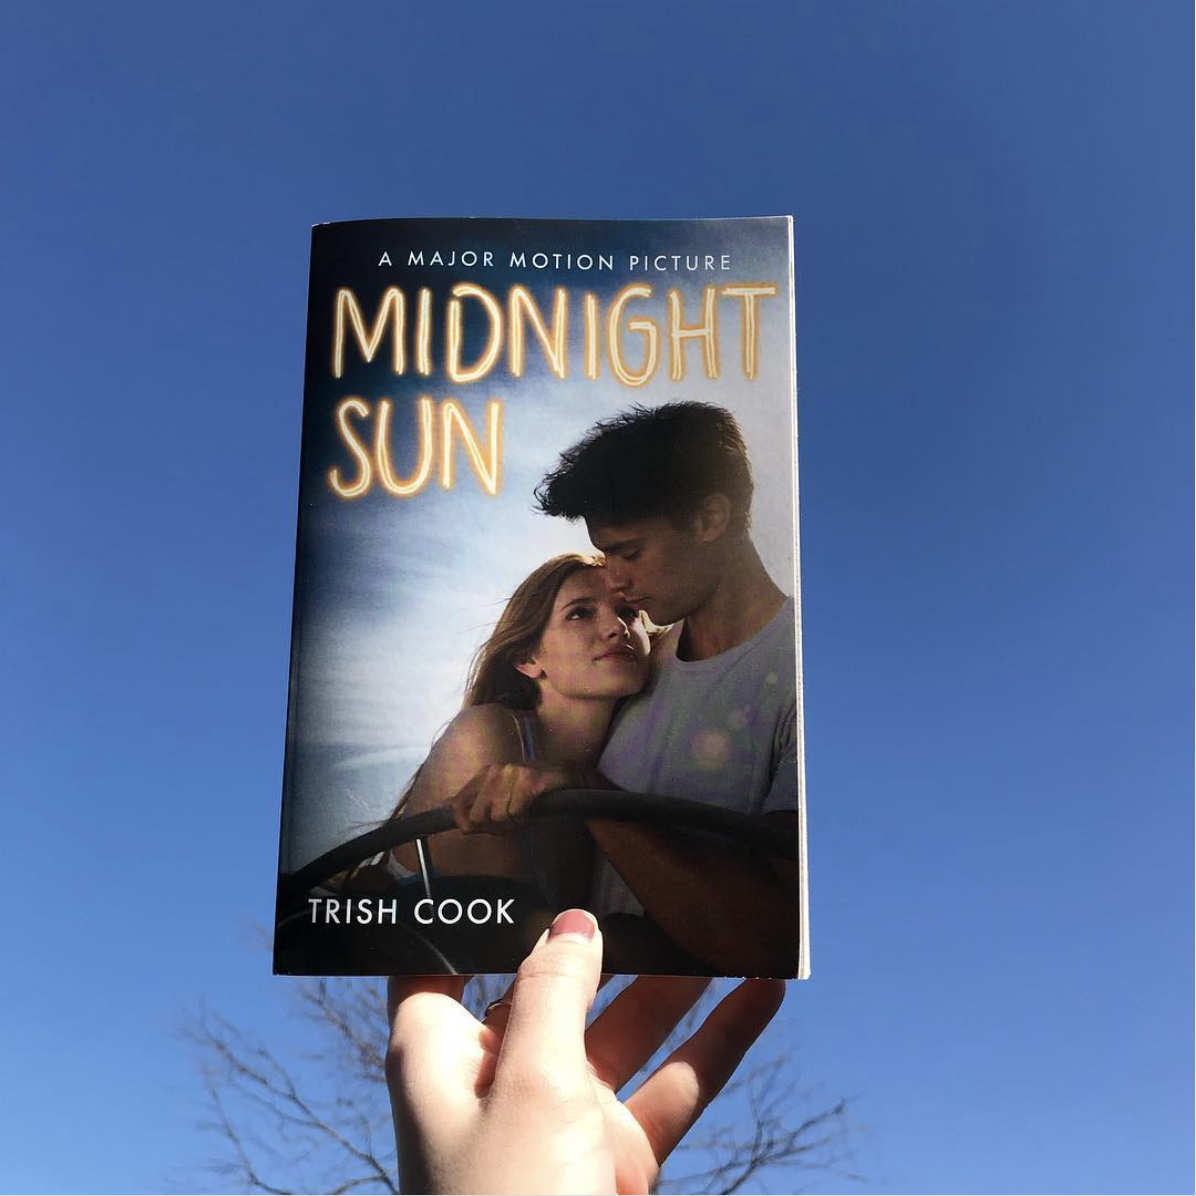 NOVL - Instagram image of Midnight Sun by Trish Cook